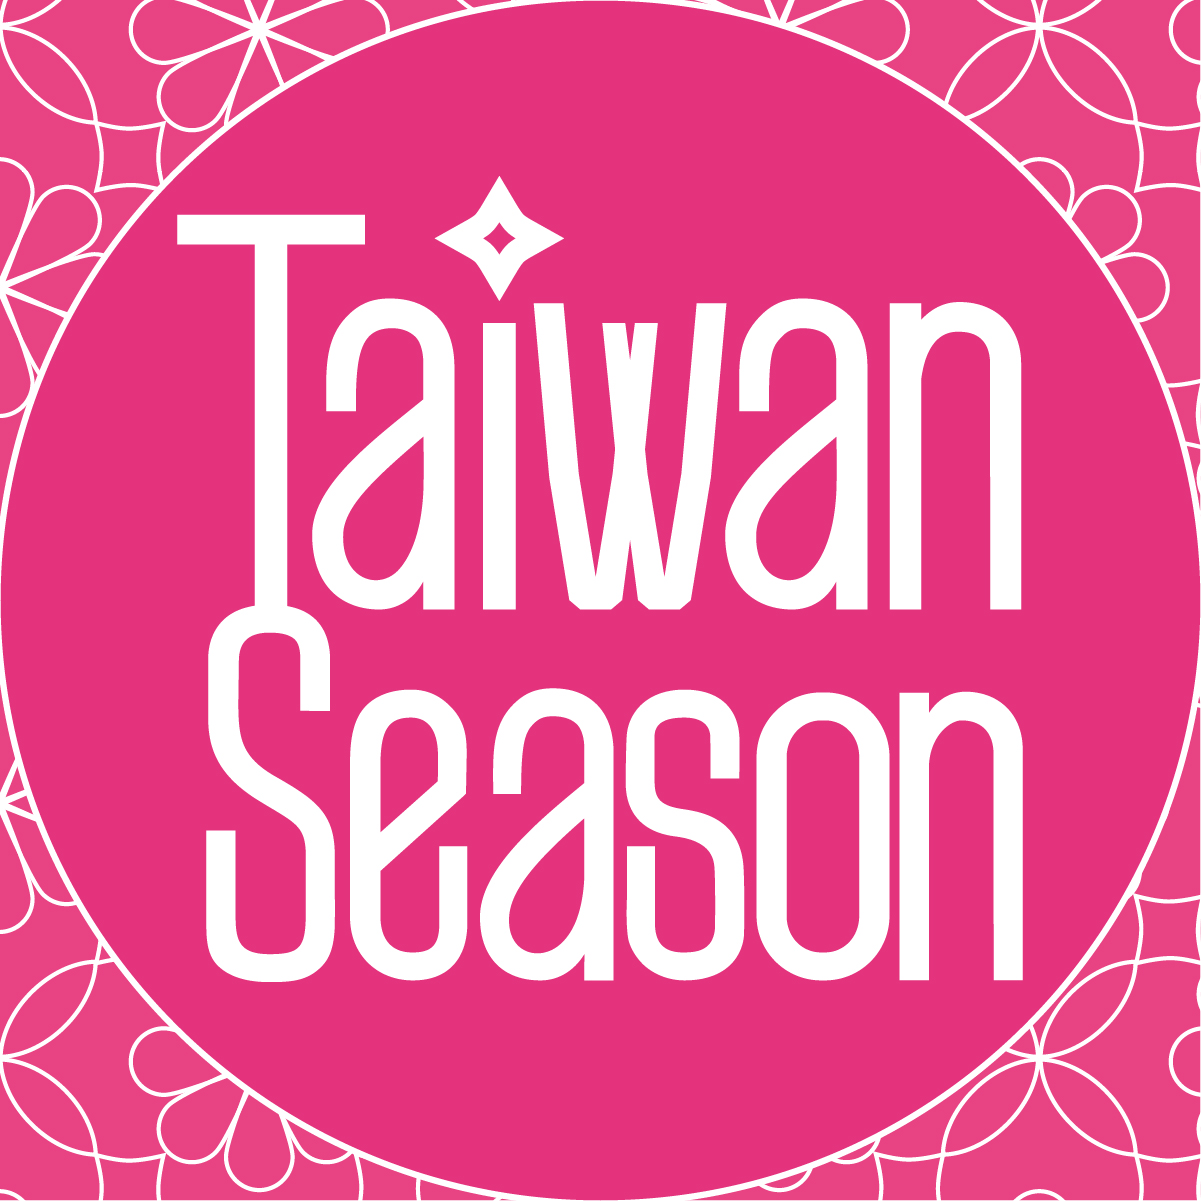 Taiwan Season